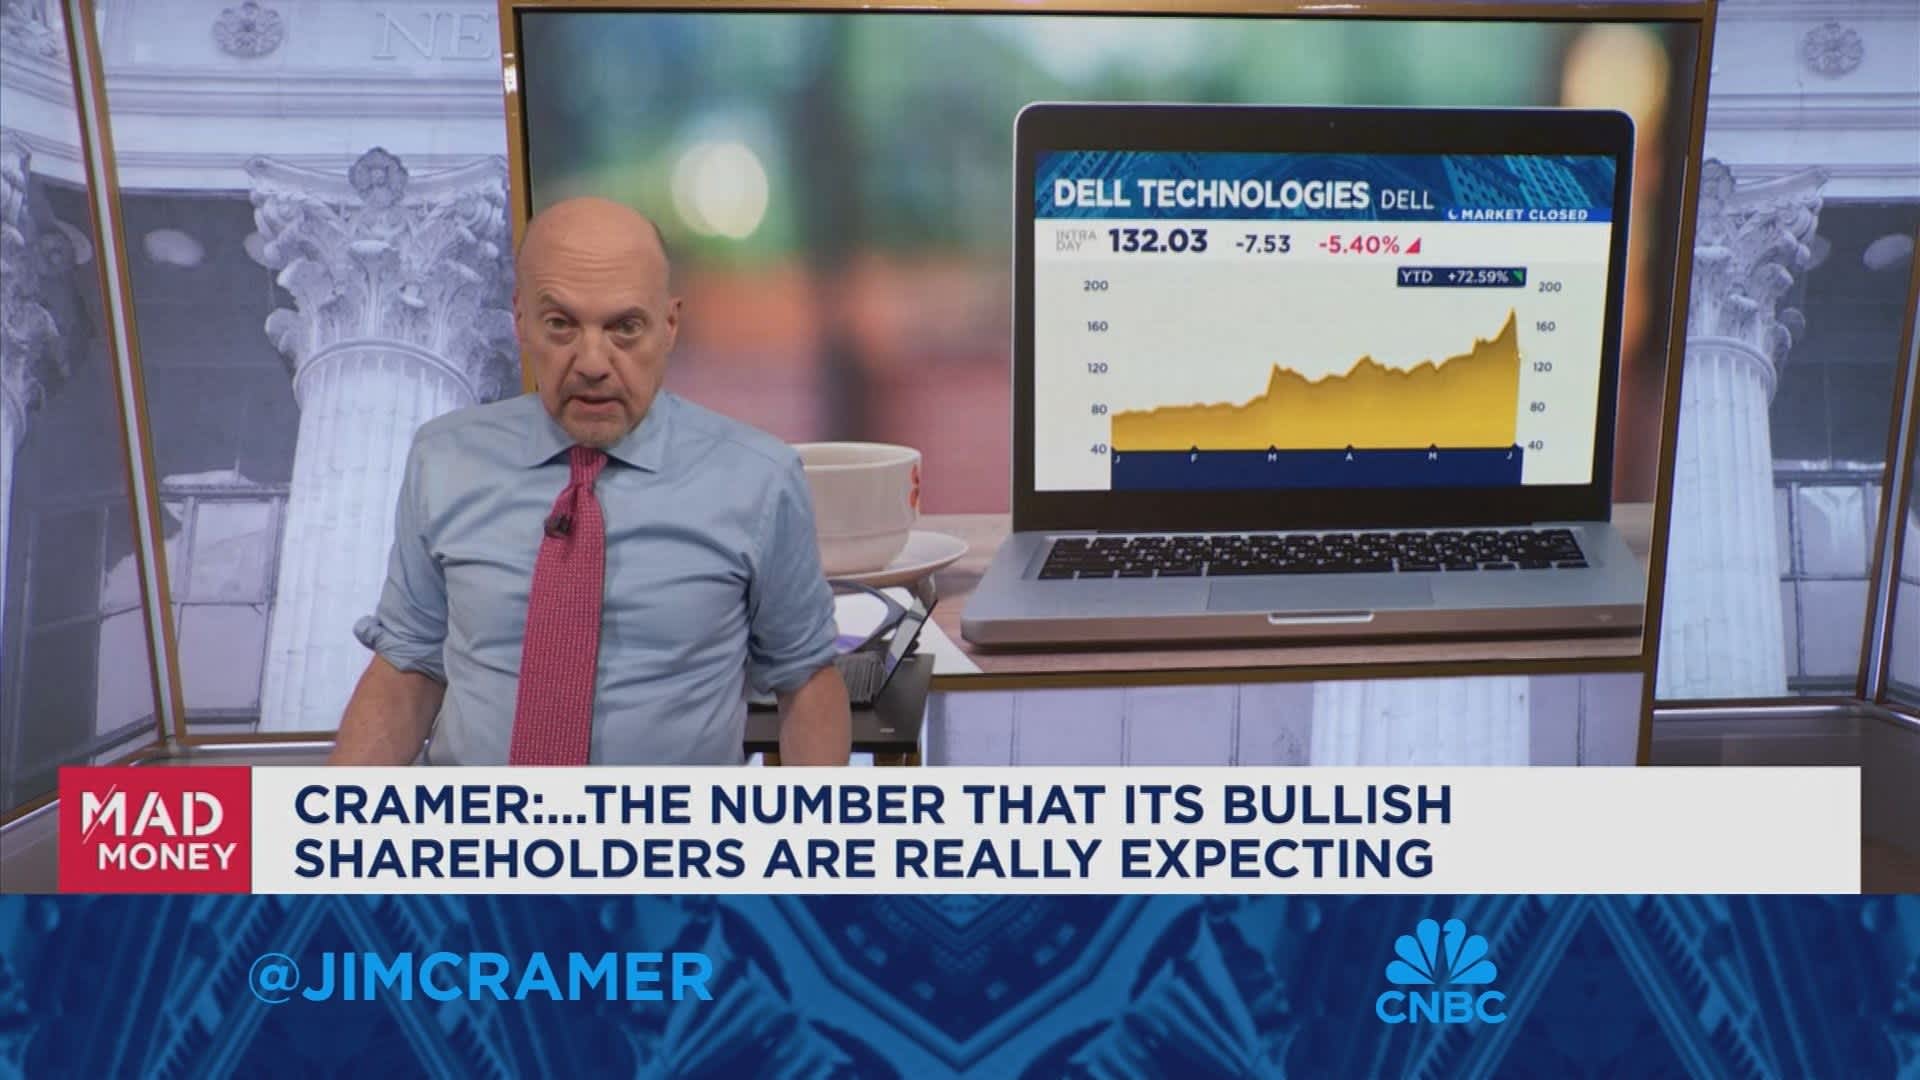 Jim Cramer takes a closer look at Dell earnings